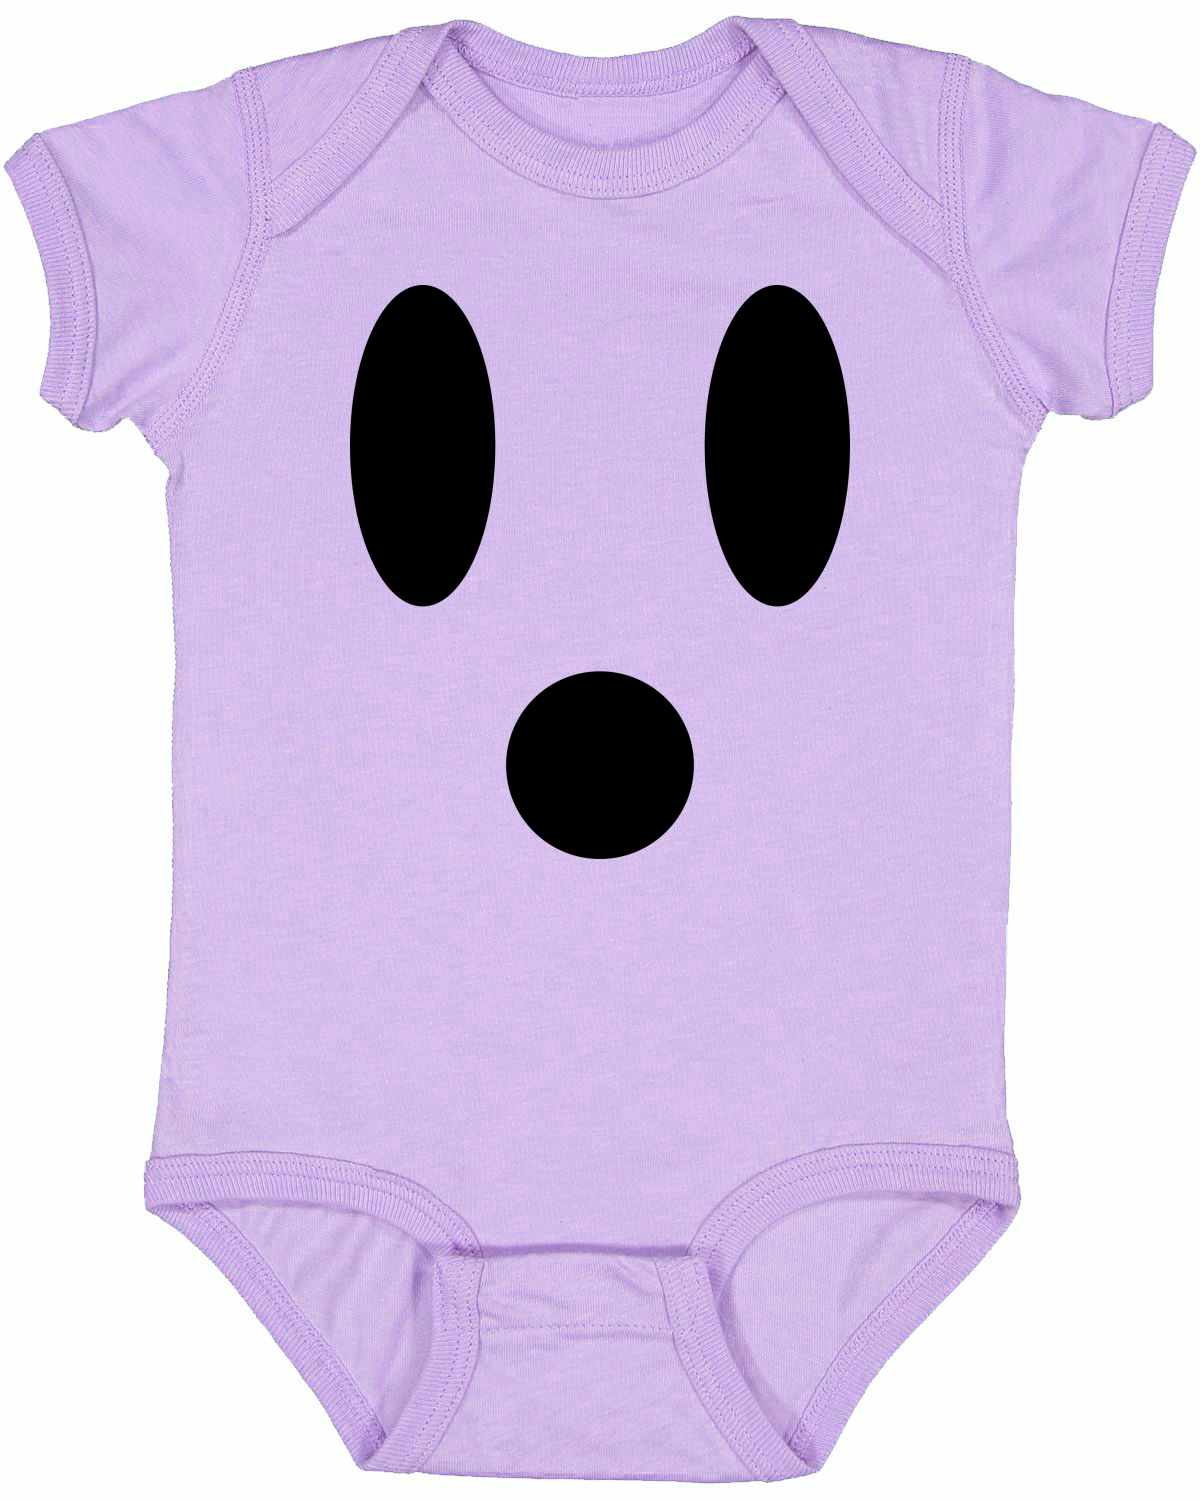 Ghost Face on Infant BodySuit (#612-10)